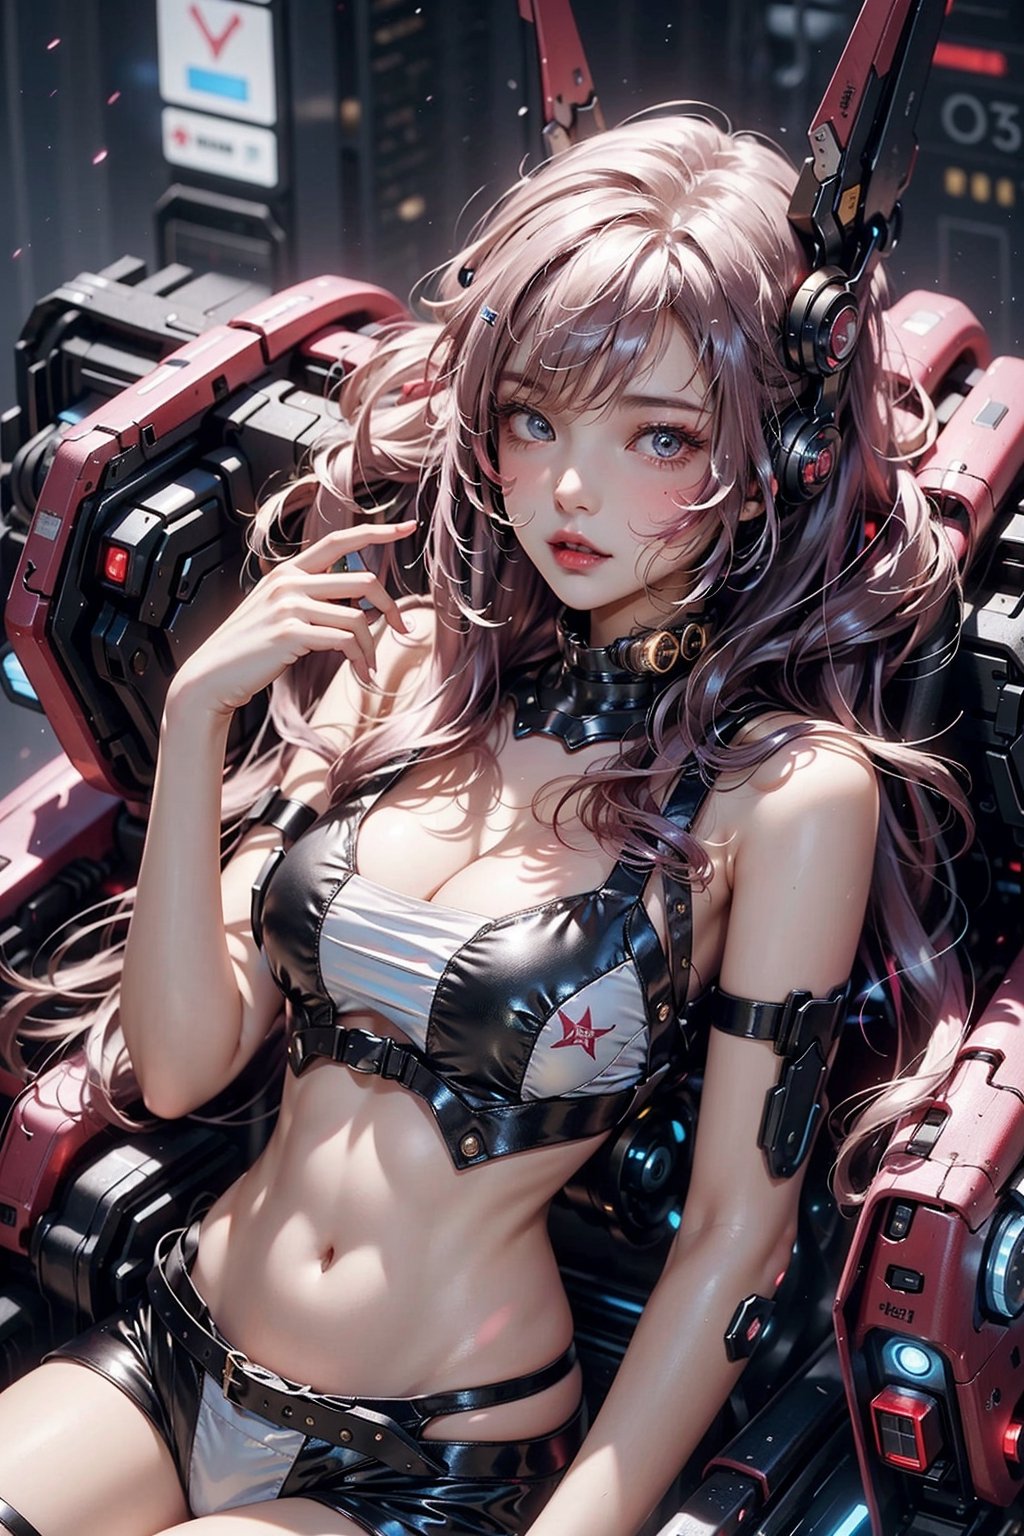 xxmixgirl, A very cute Japanese girl in a revealing cyberpunk costume, ziprealism,cyberpunk style